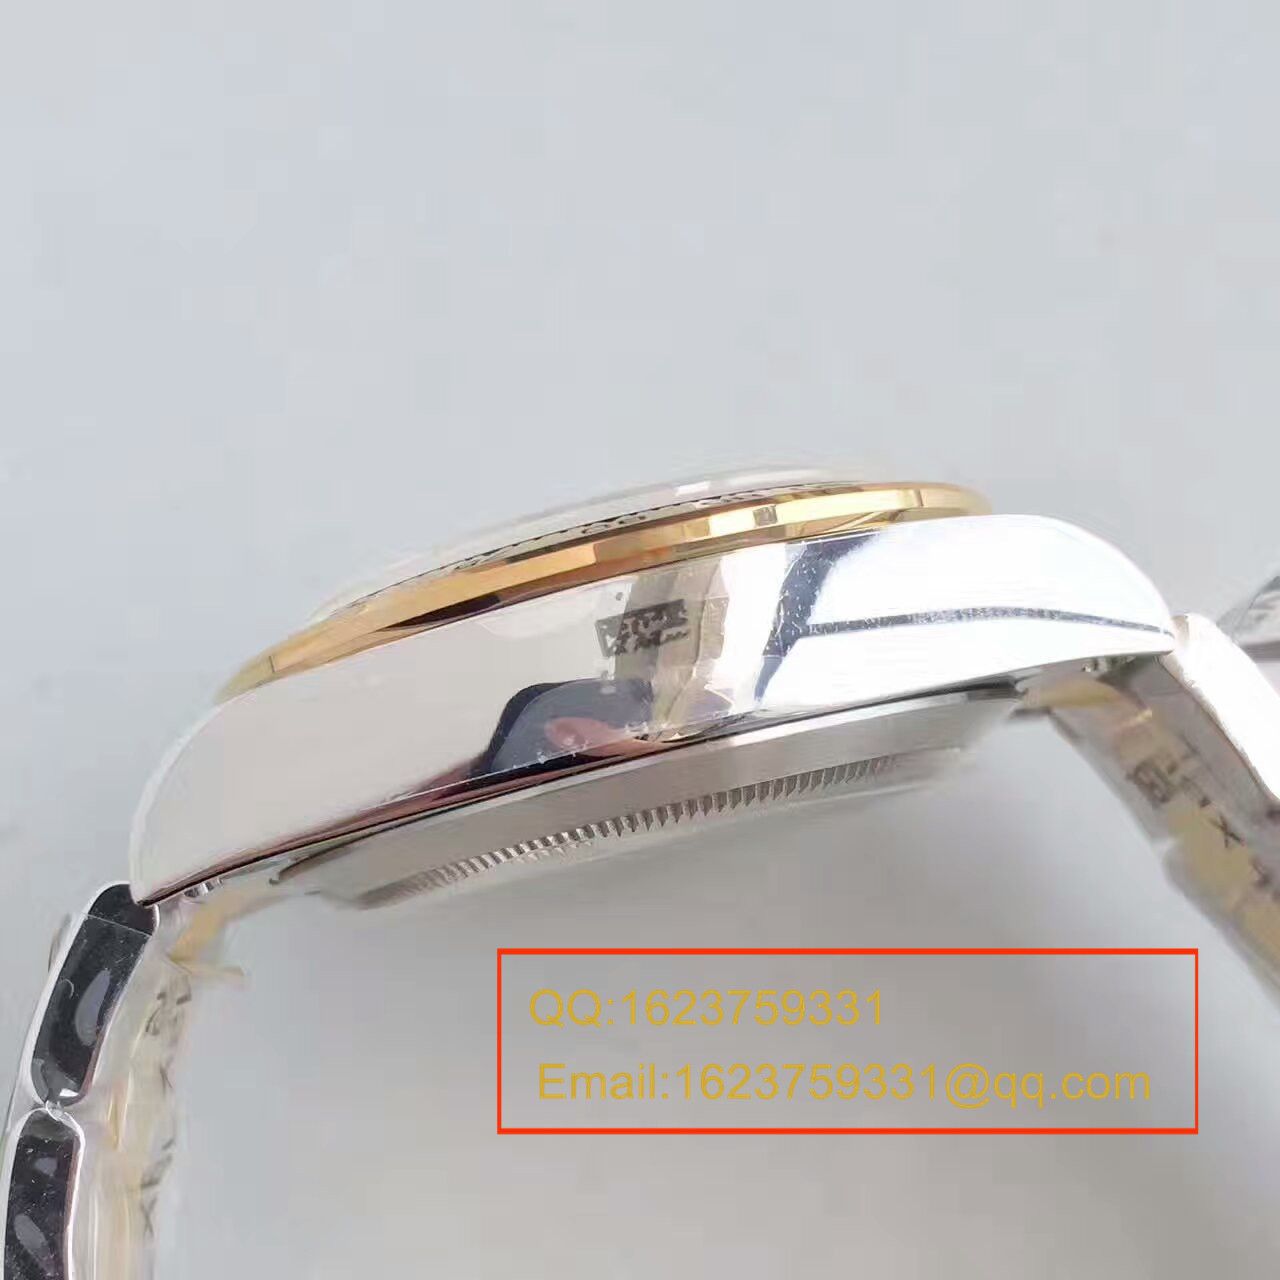 【JF厂1:1复刻手表】劳力士宇宙计型迪通拿系列116508金盘腕表 